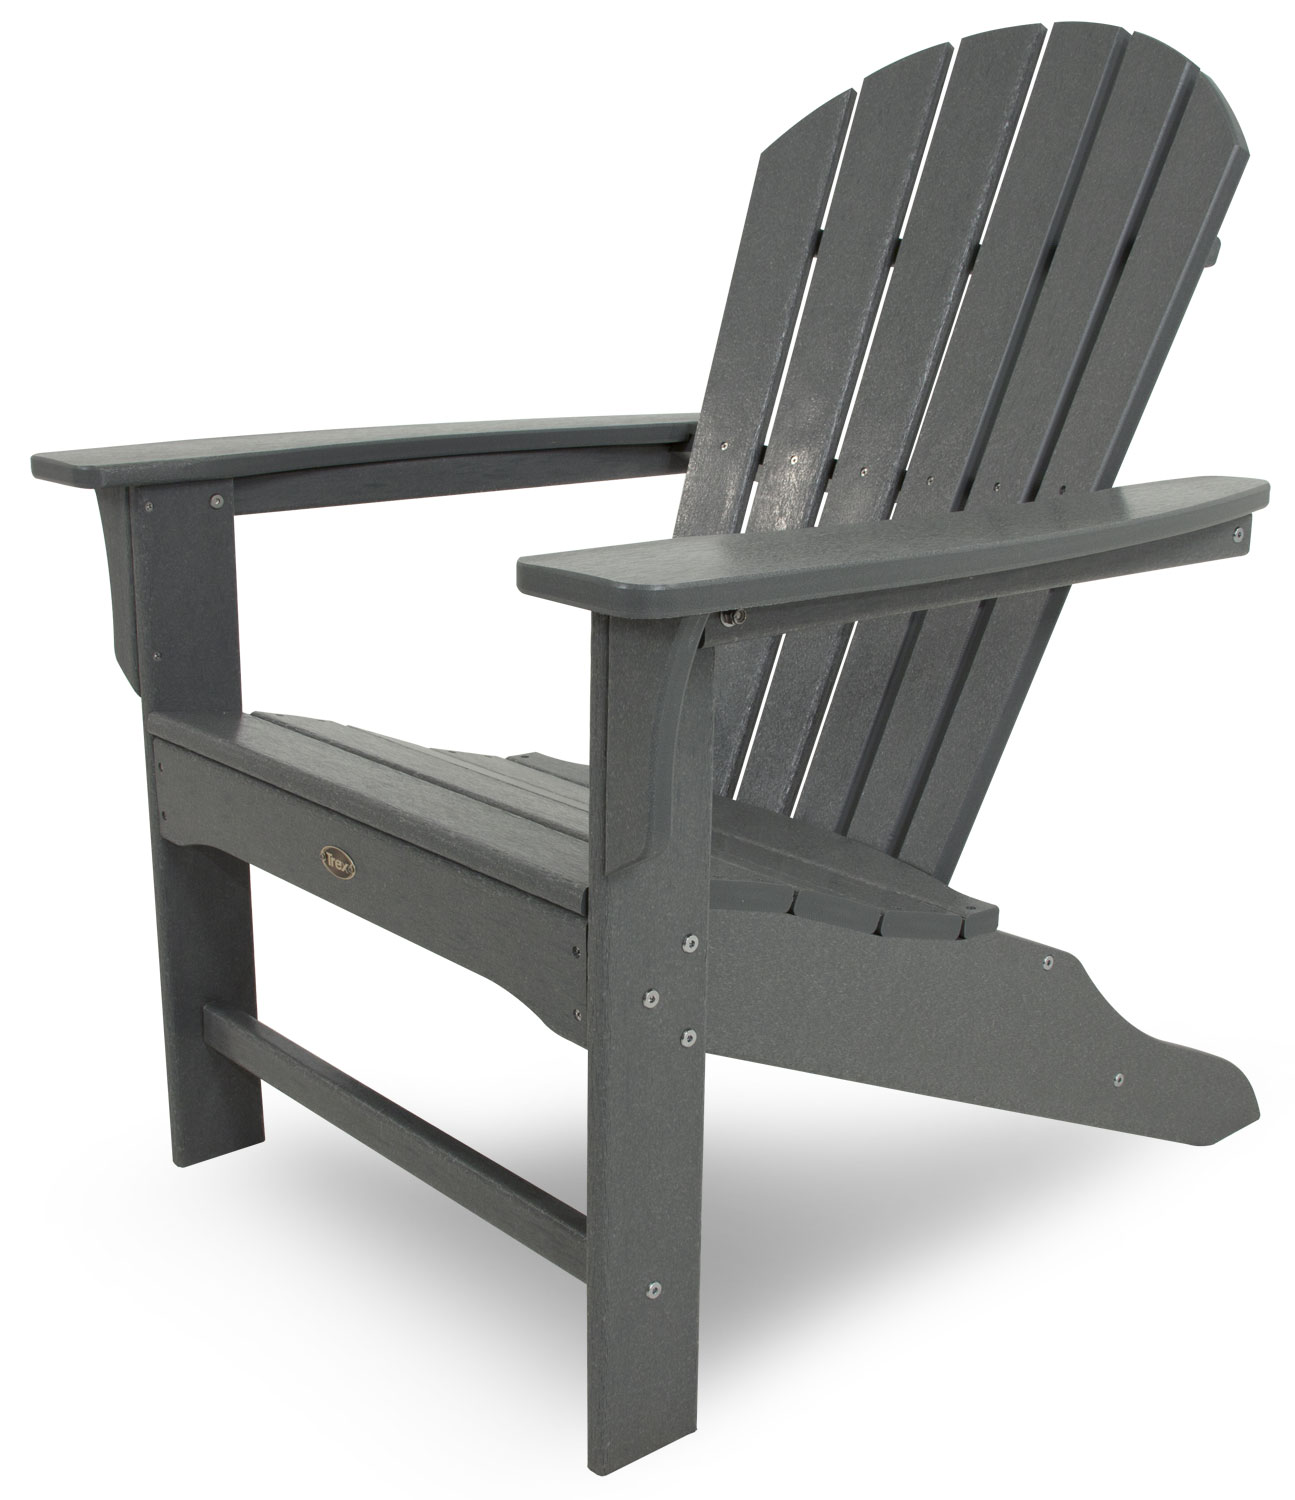 TrexÂ® Outdoor Furnitureâ„¢ Yacht Club Shellback Adirondack Chair